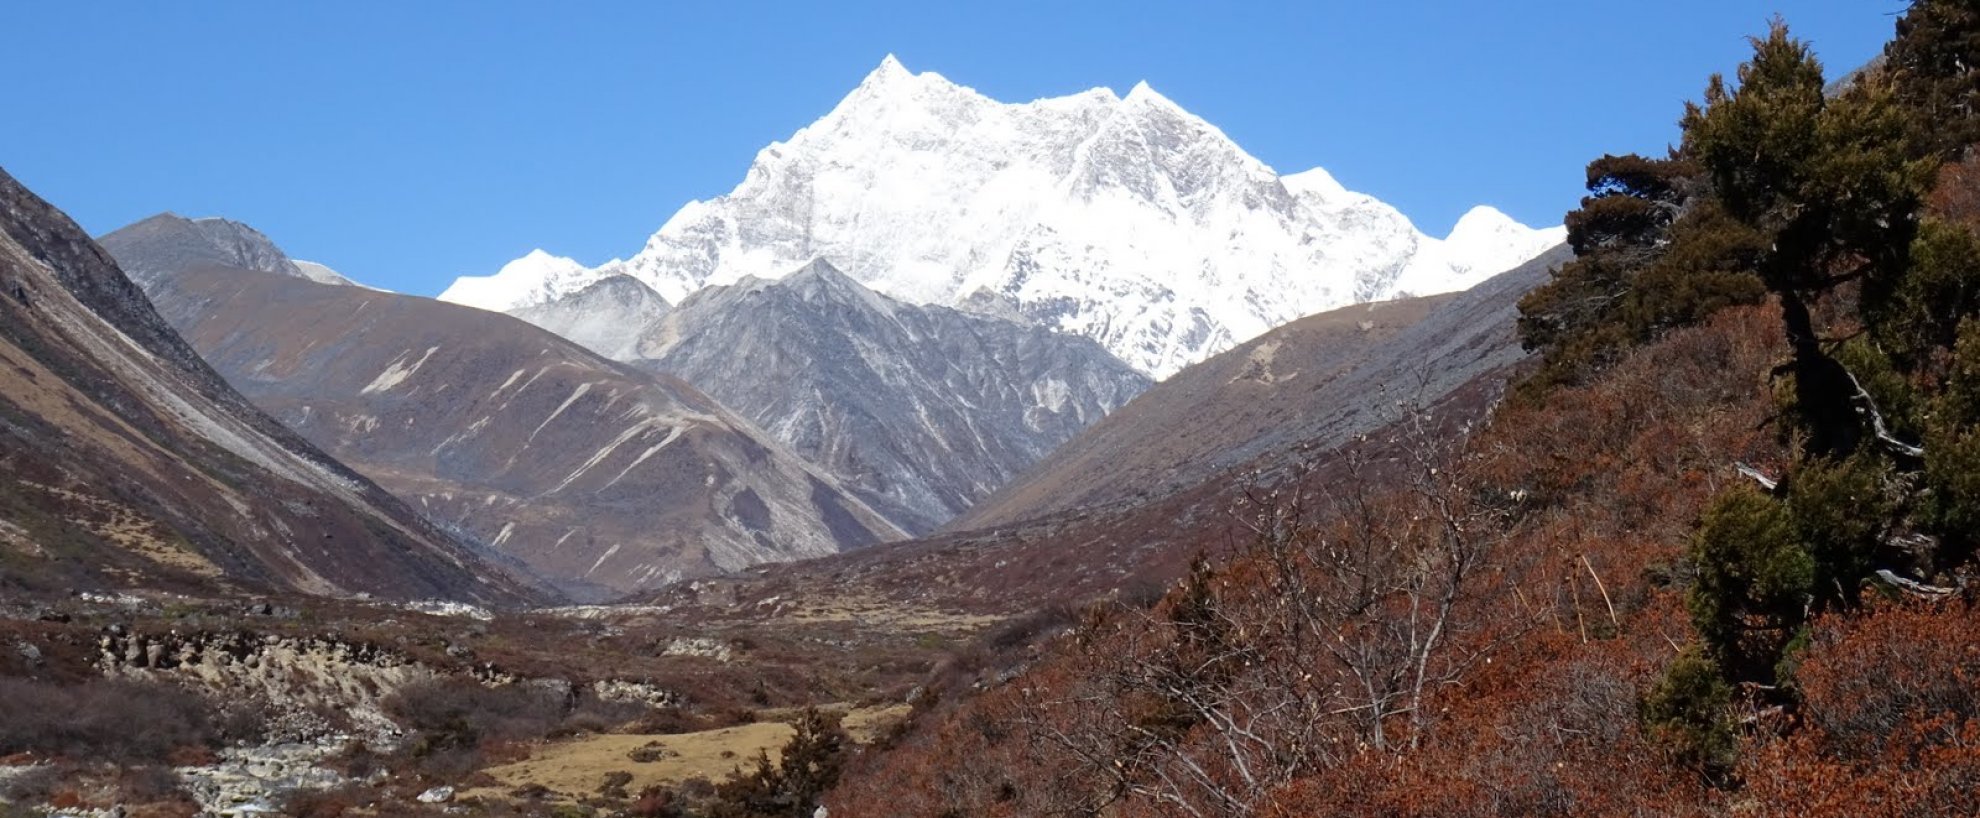 Urlaub Reise Reisen Trekking Bhutan Gangkar Puensum Trek